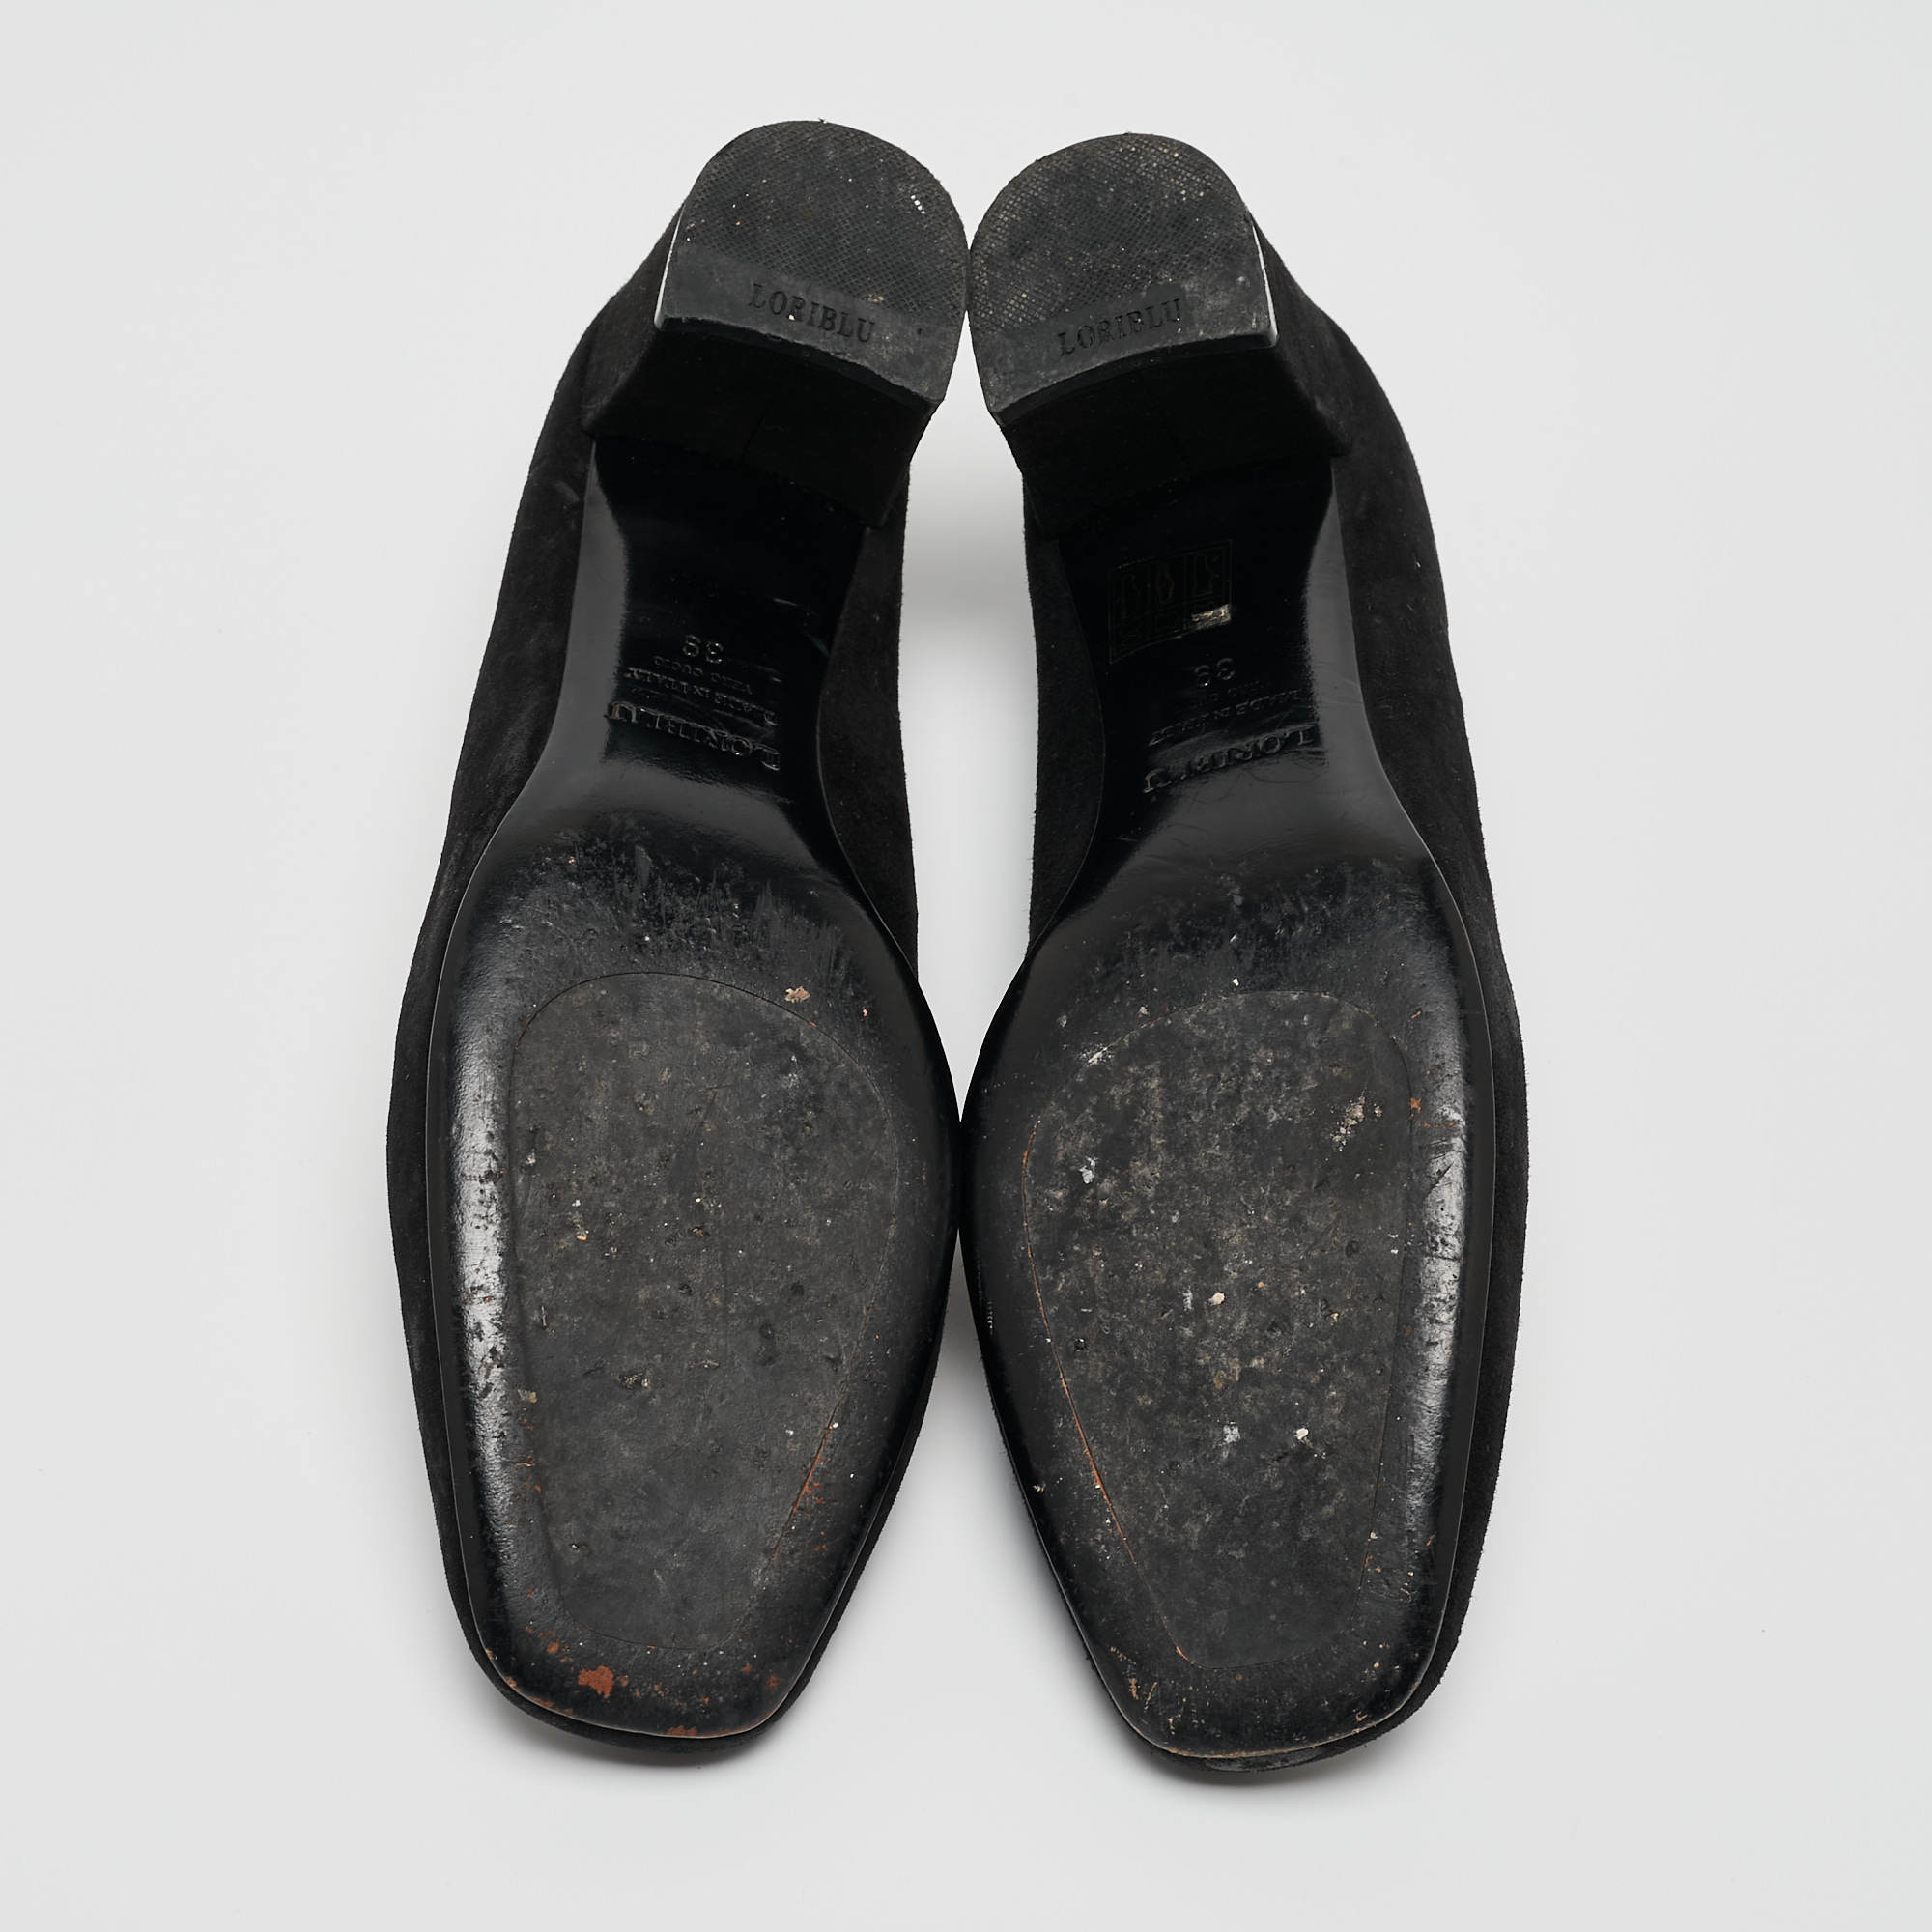 Loriblu Black Suede Block Heel Loafer Pumps Size 39